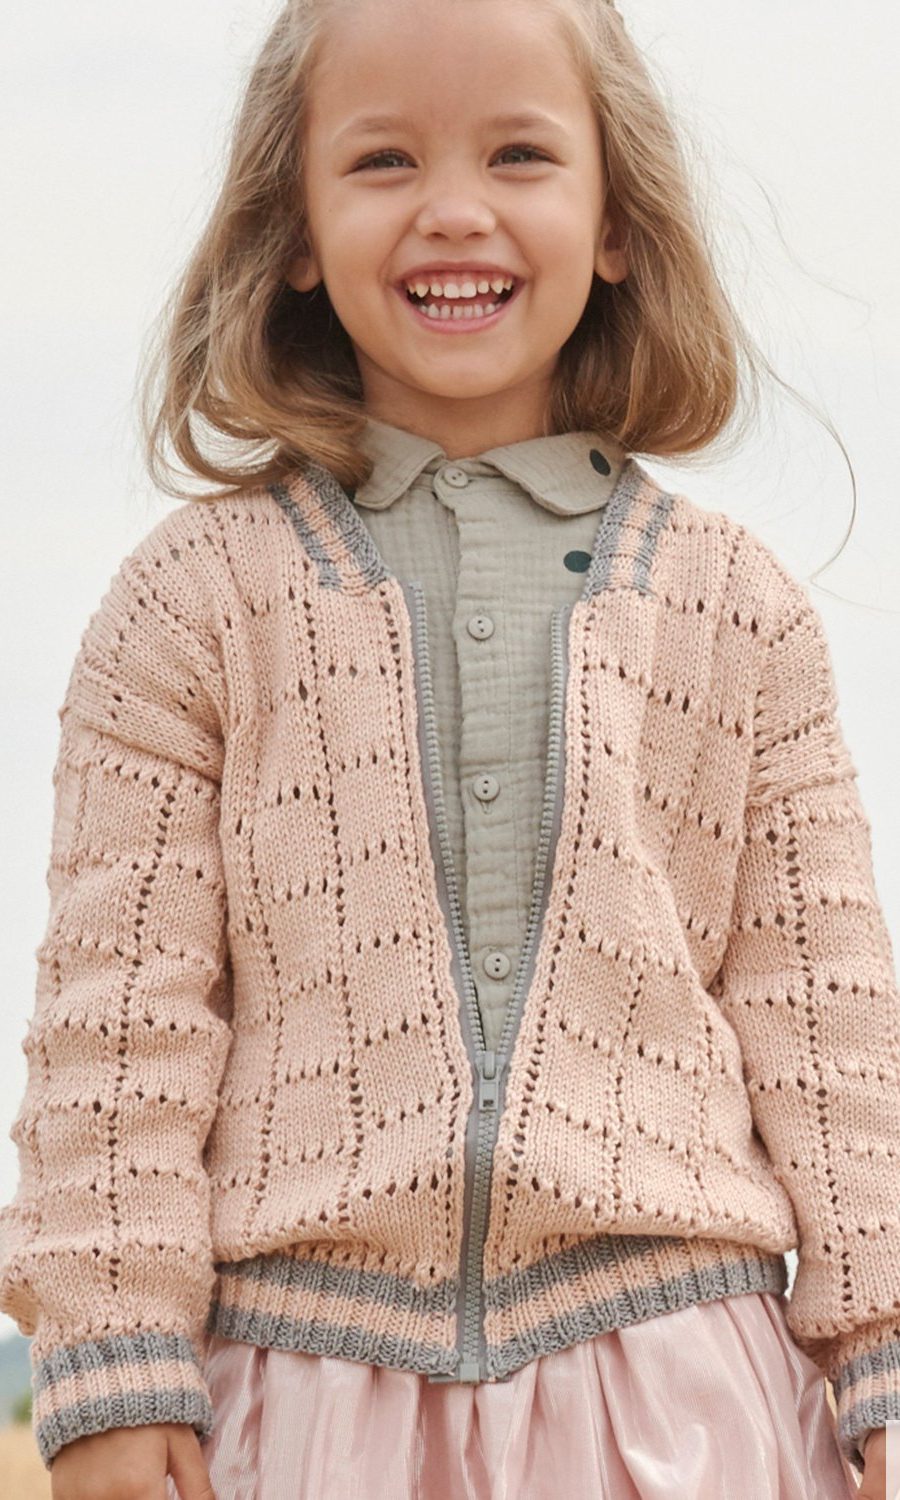 pattern-knit-crochet-kids-jacket-spring-summer-katia-6167-8-g